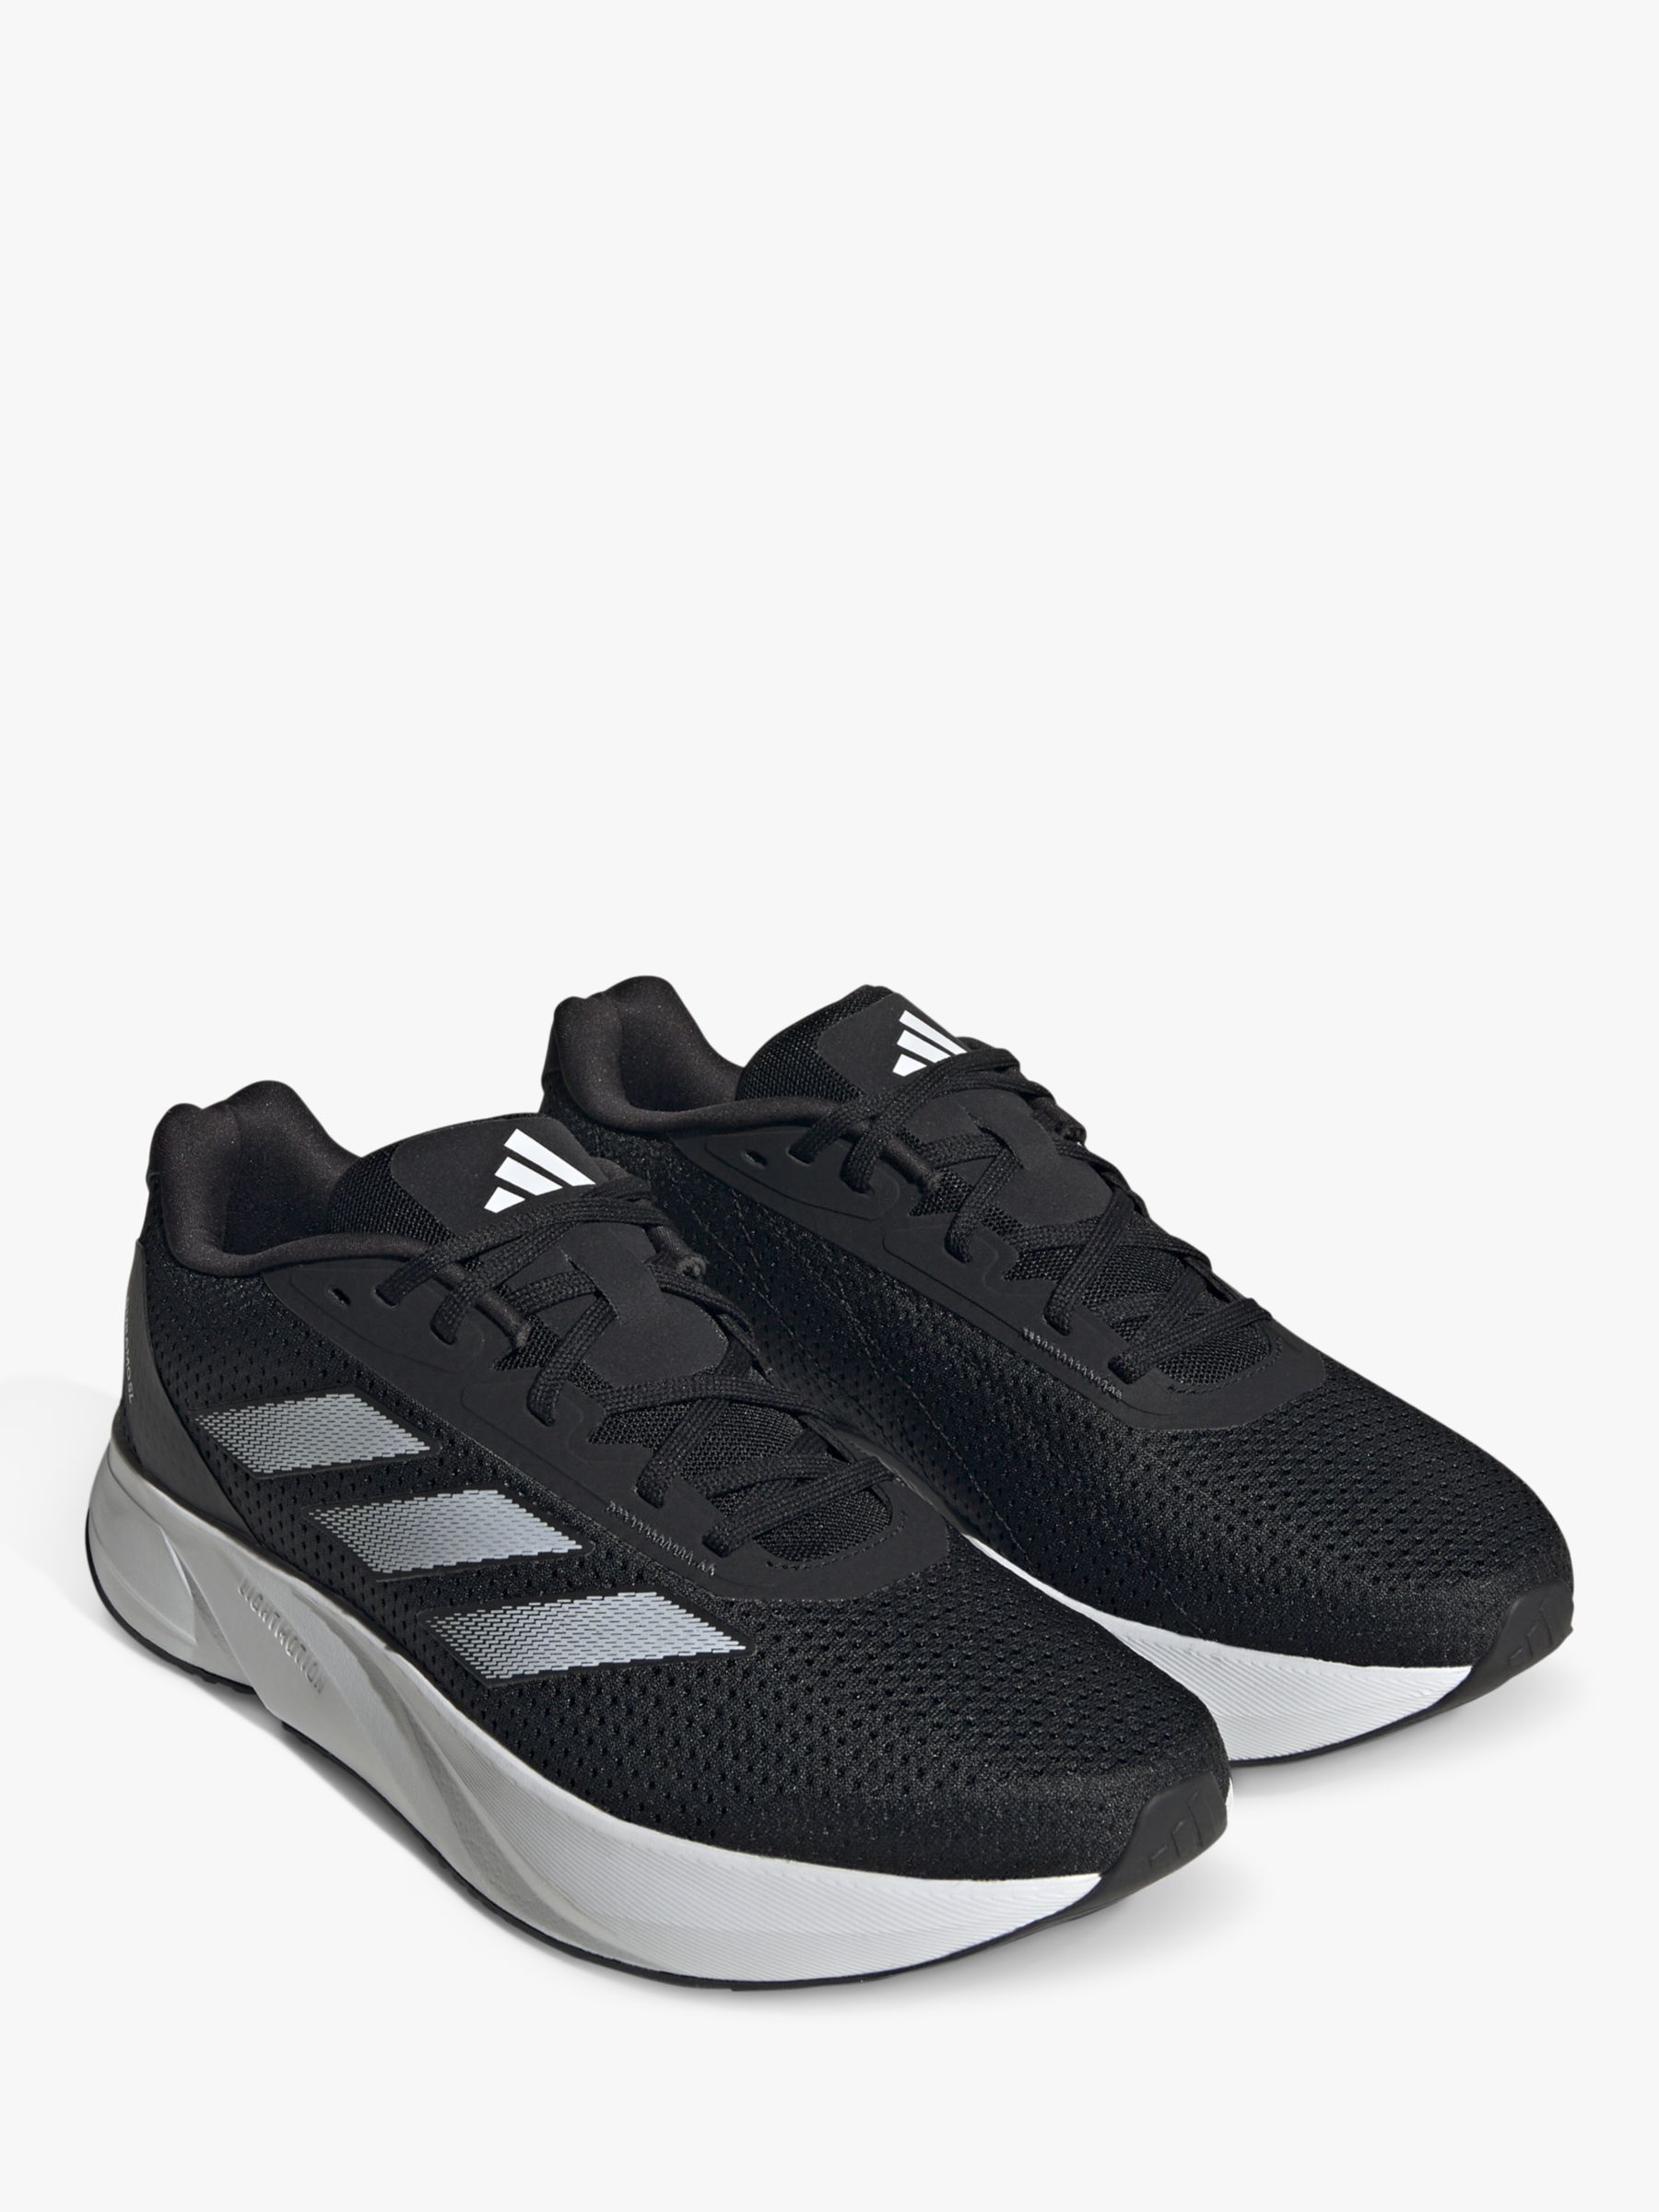 Buy adidas Duramo SL Trainers, Black/White/Carbon Online at johnlewis.com